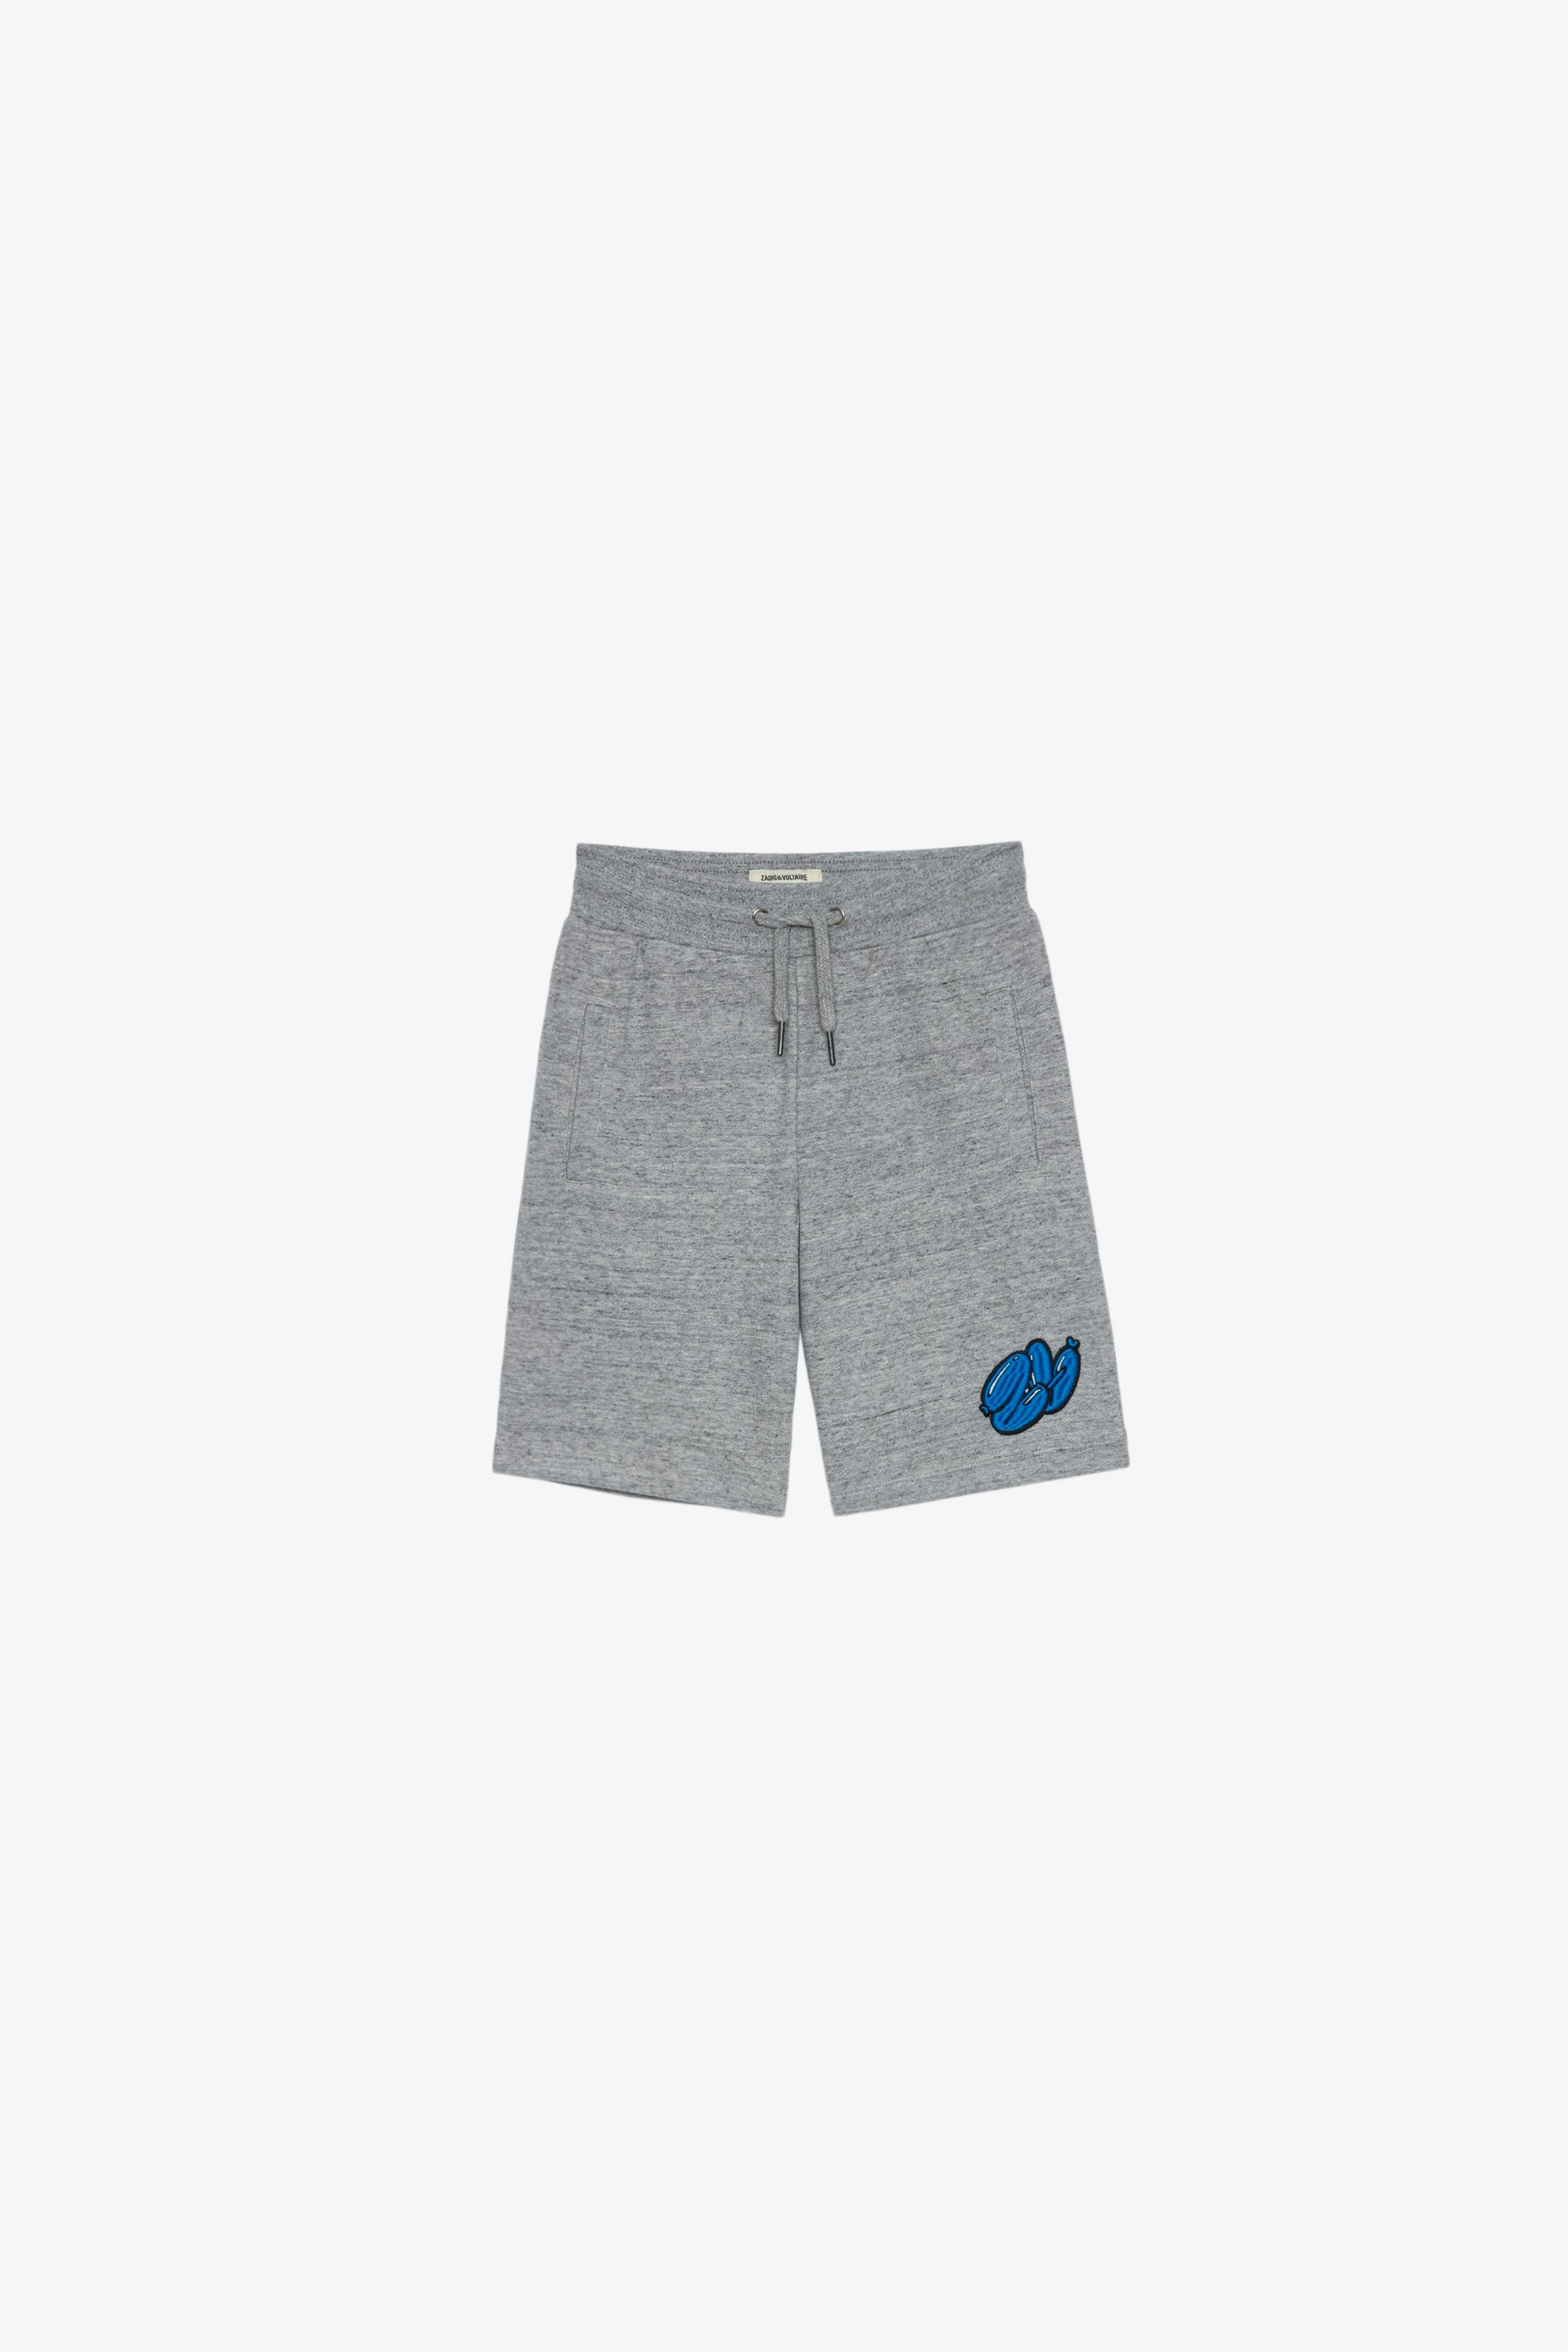 Kurt Kids' Bermudas Kids’ Bermuda shorts in grey marl cotton with Core Cho embroidery